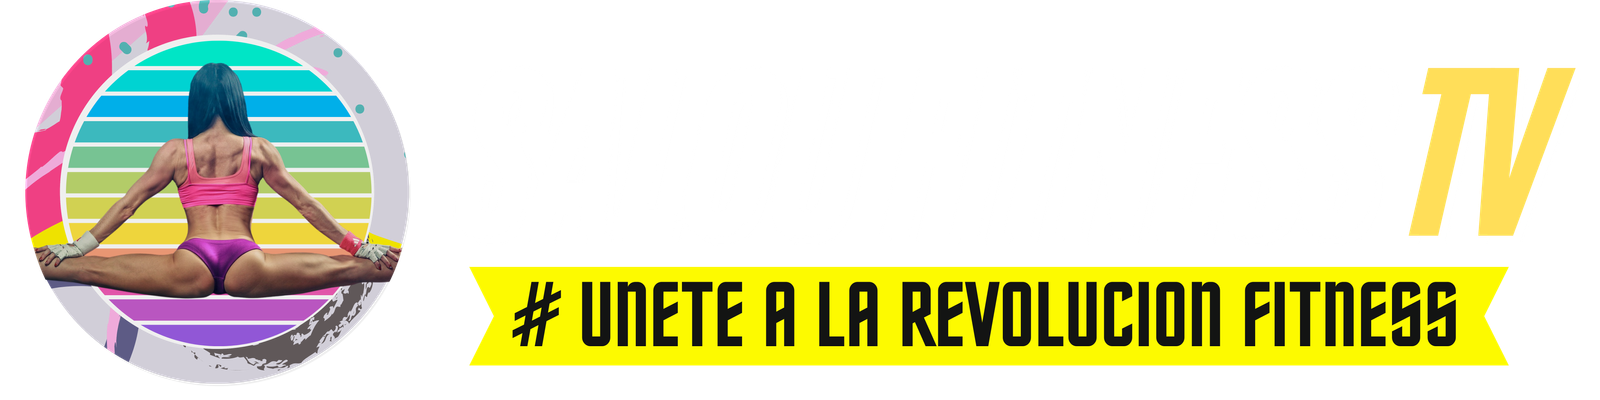 Salou Fitness TV Logo